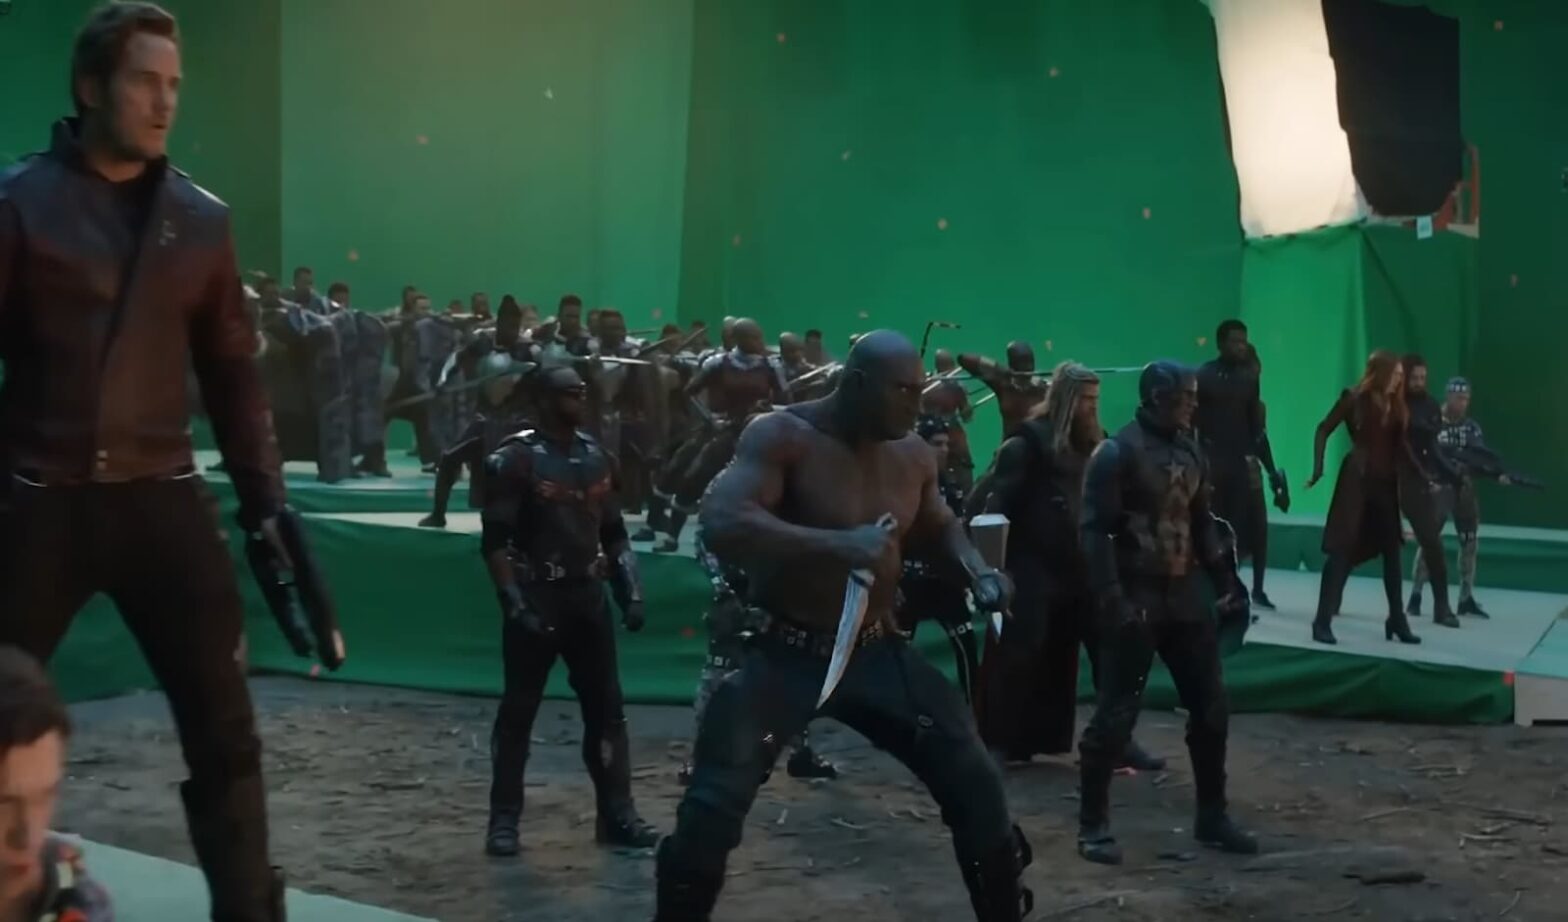 Superheroes prepare for battle on a green screen set